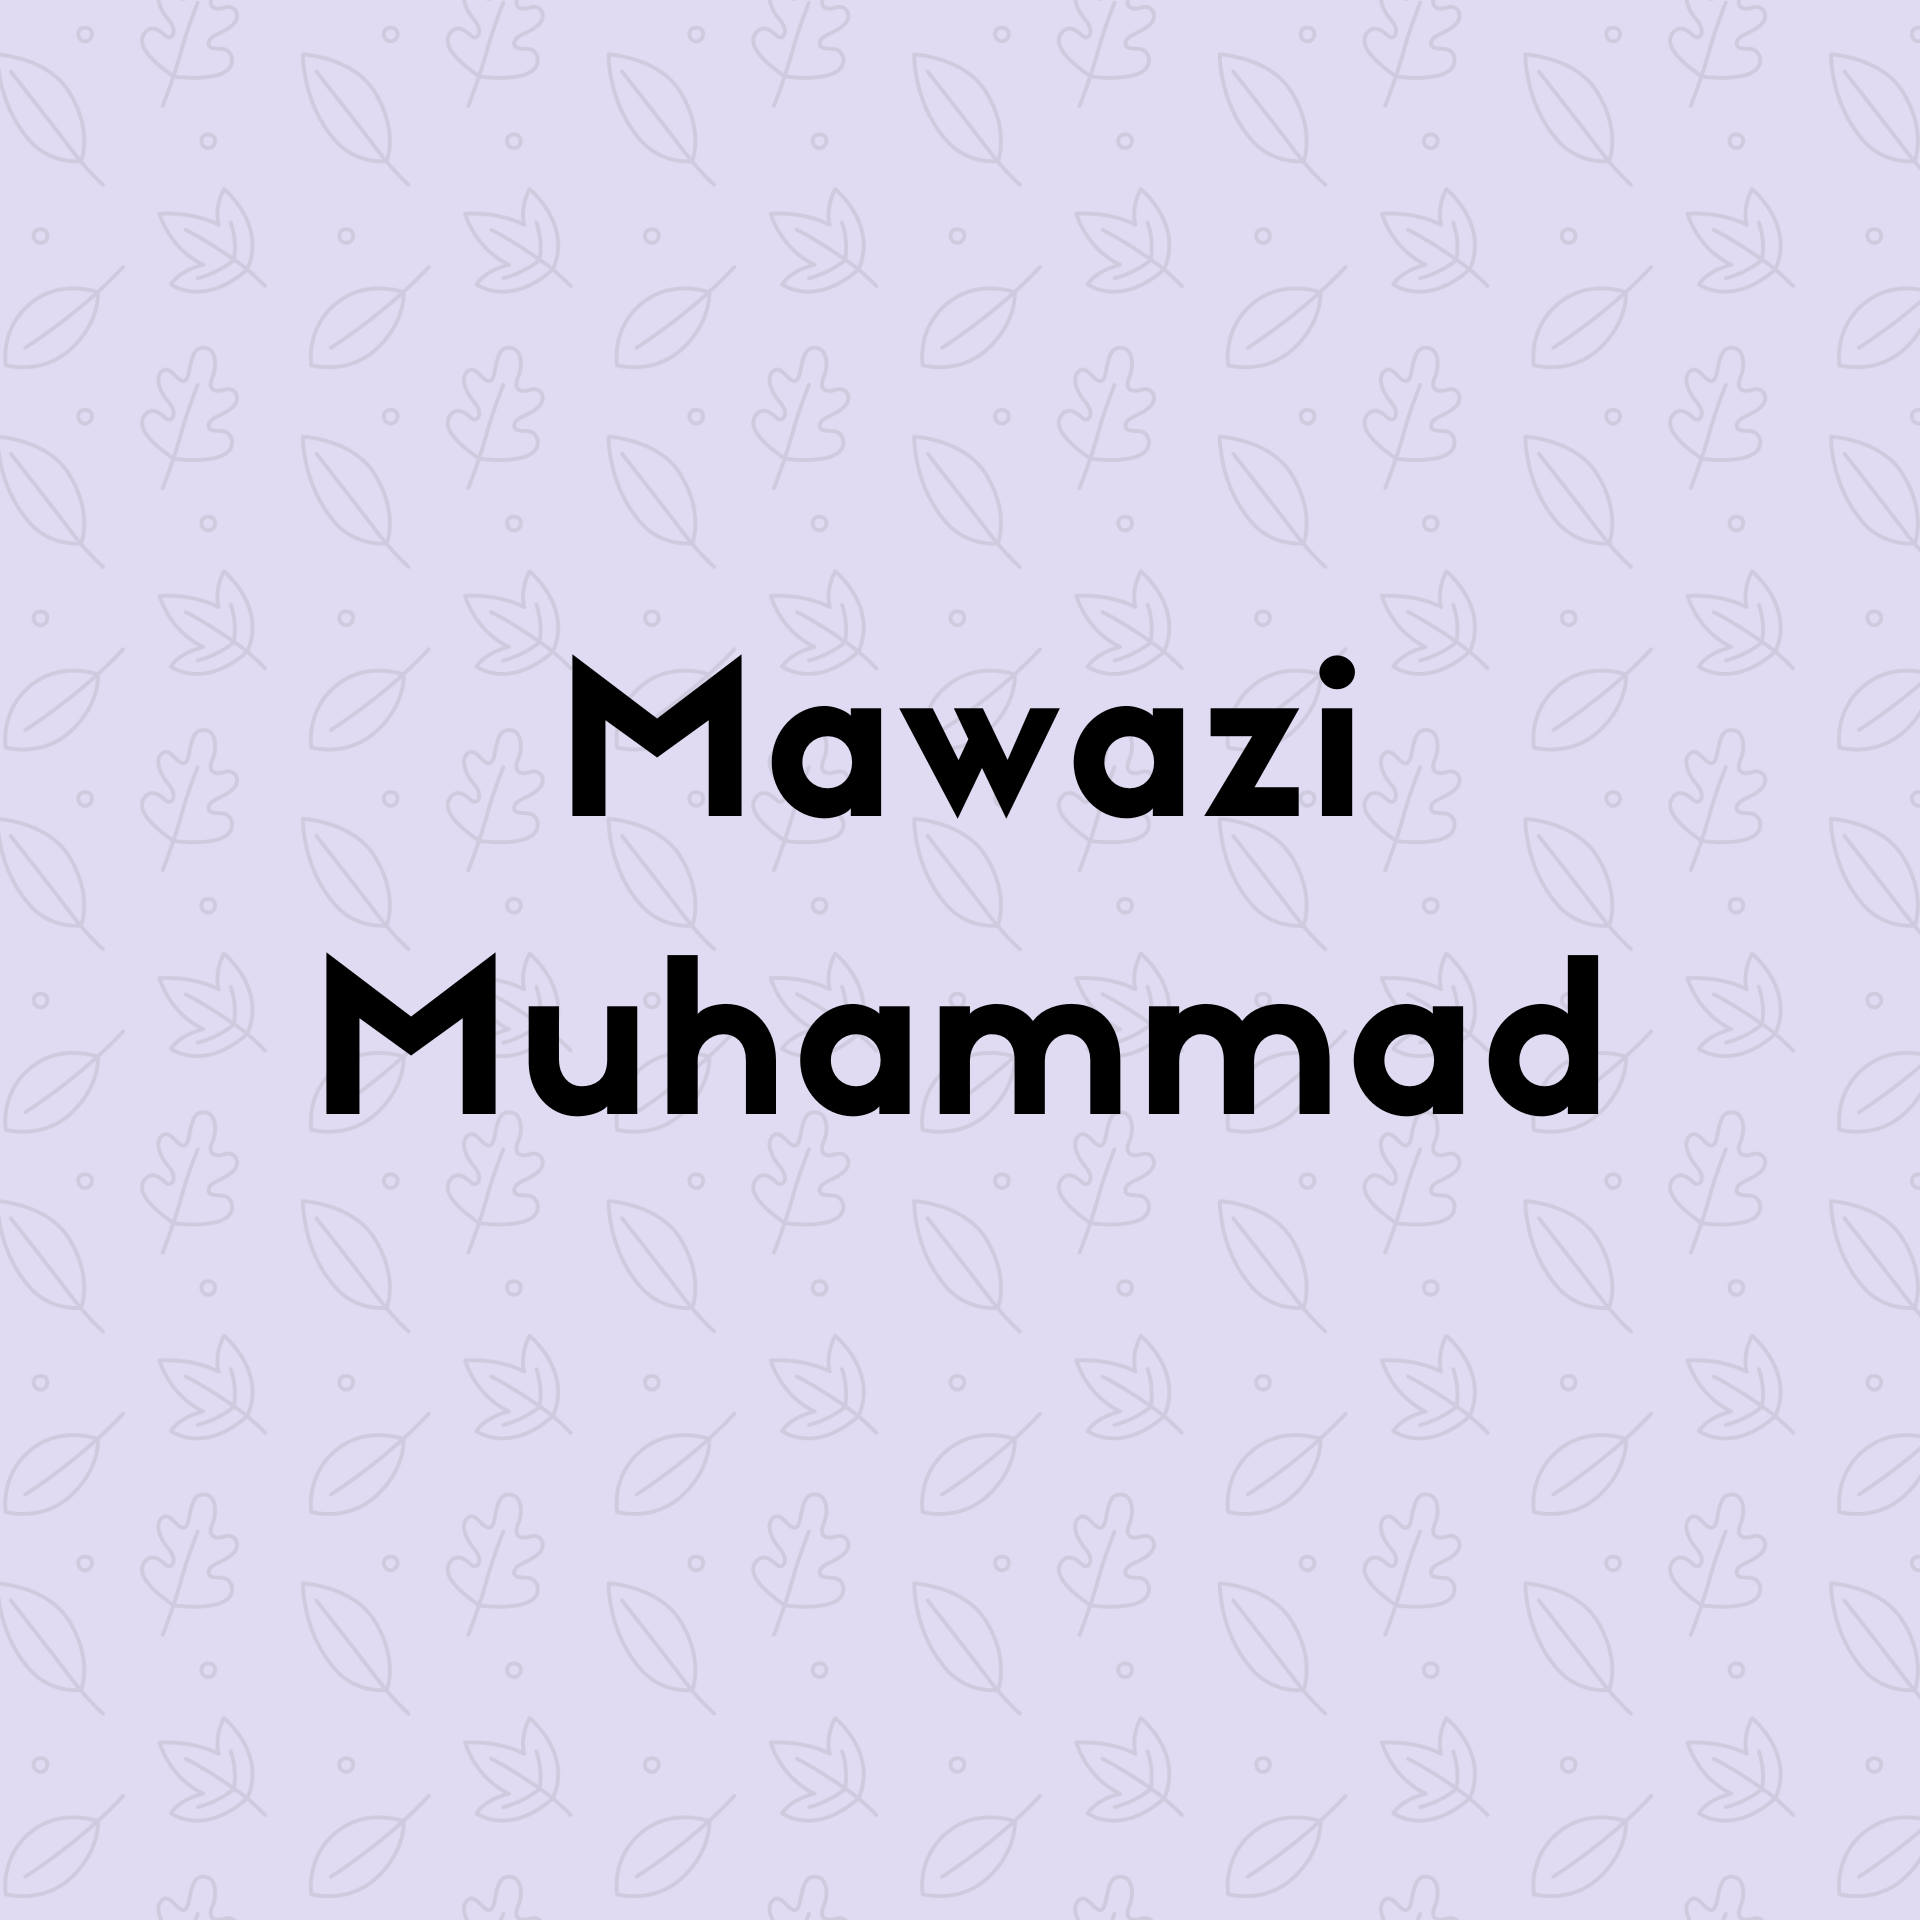  Mawazi Muhammad